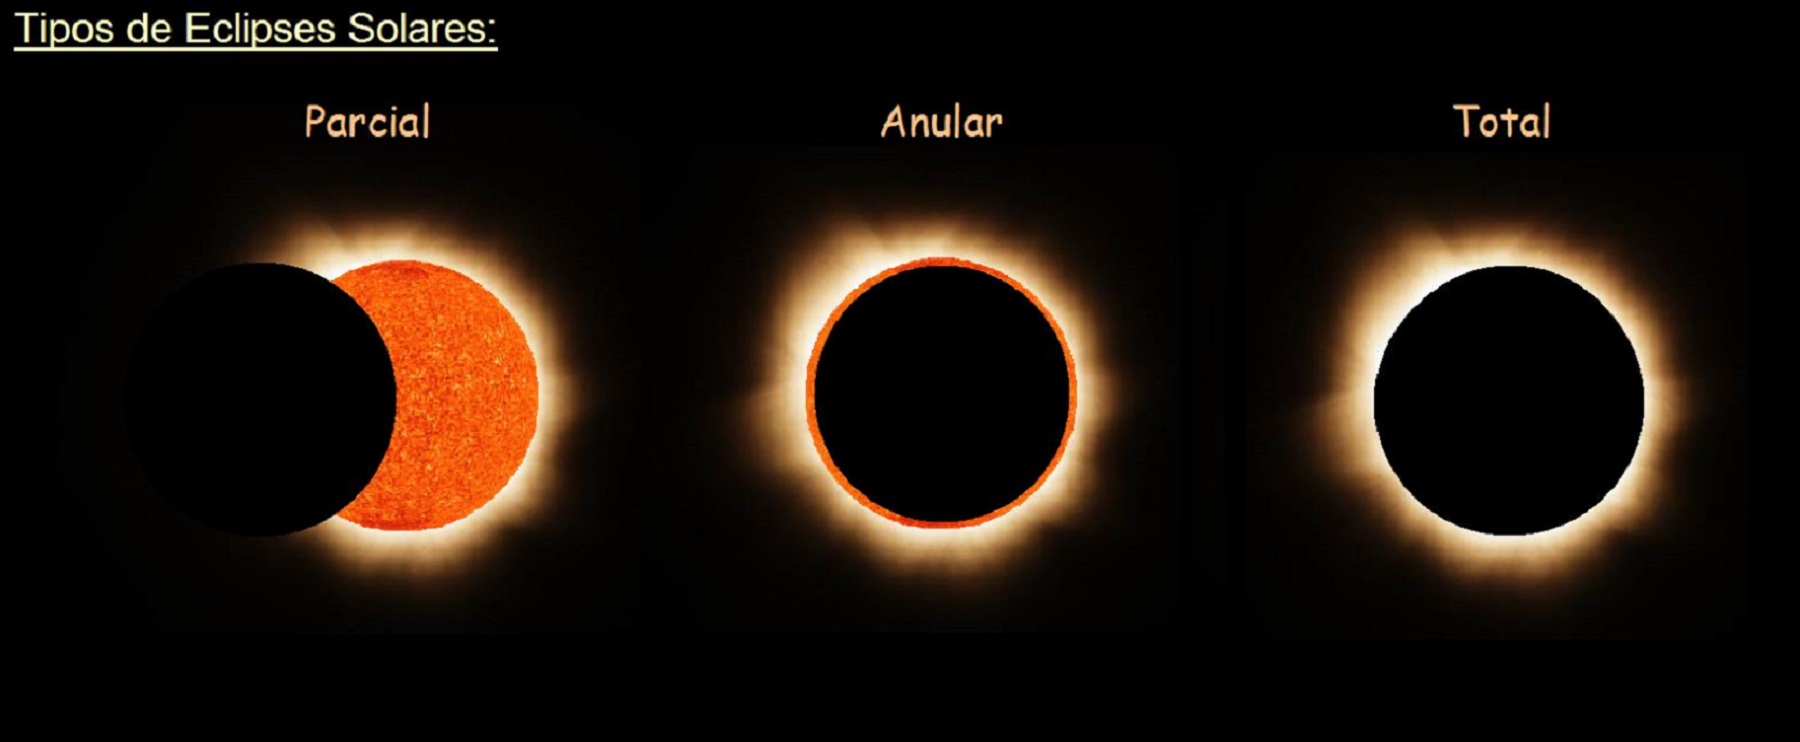 Así se ve el eclipse total / Commons